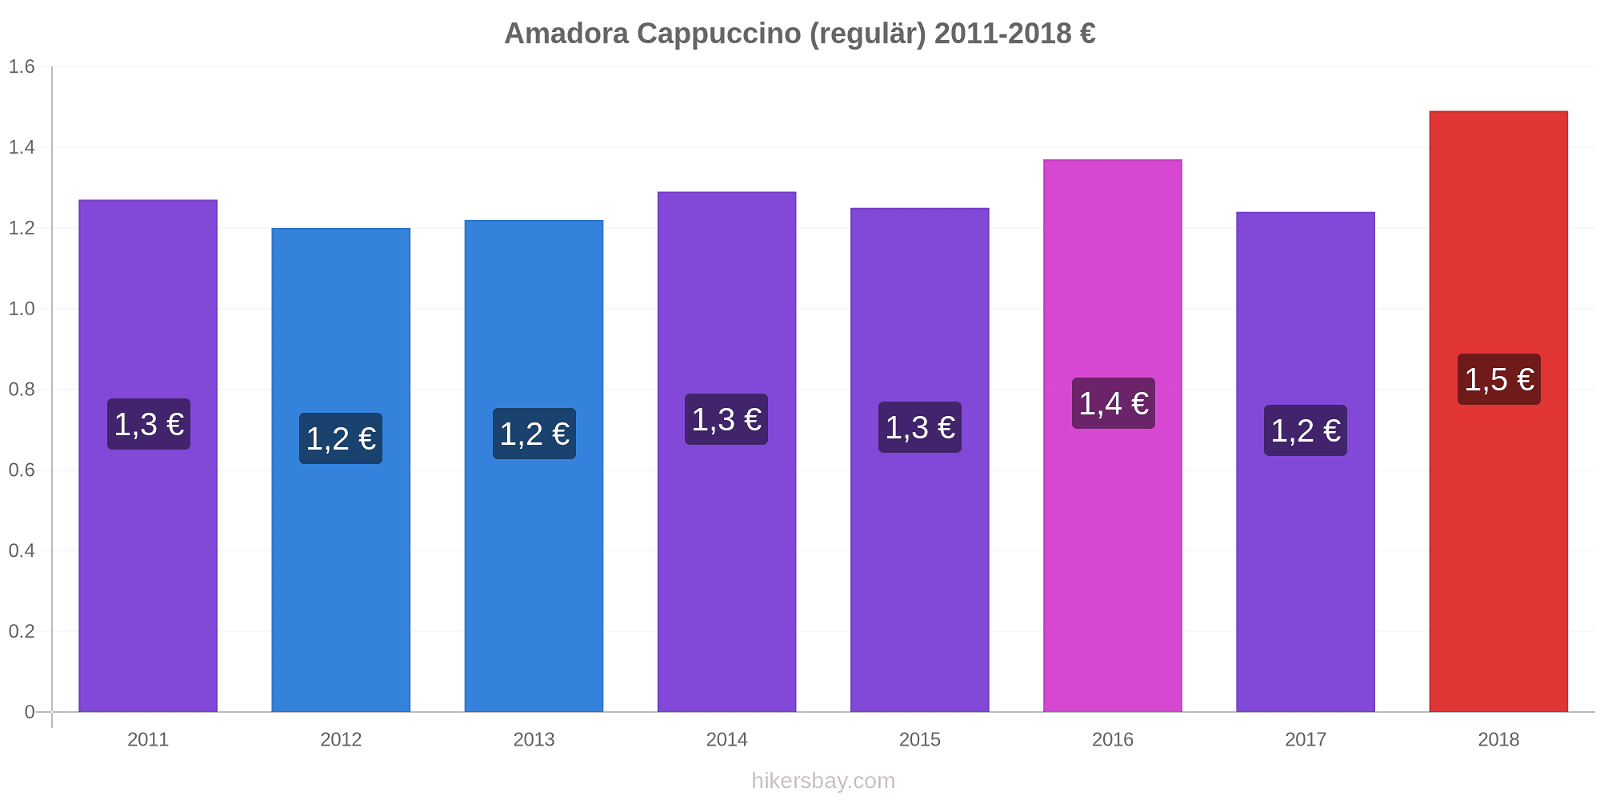 Amadora Preisänderungen Cappuccino (regulär) hikersbay.com